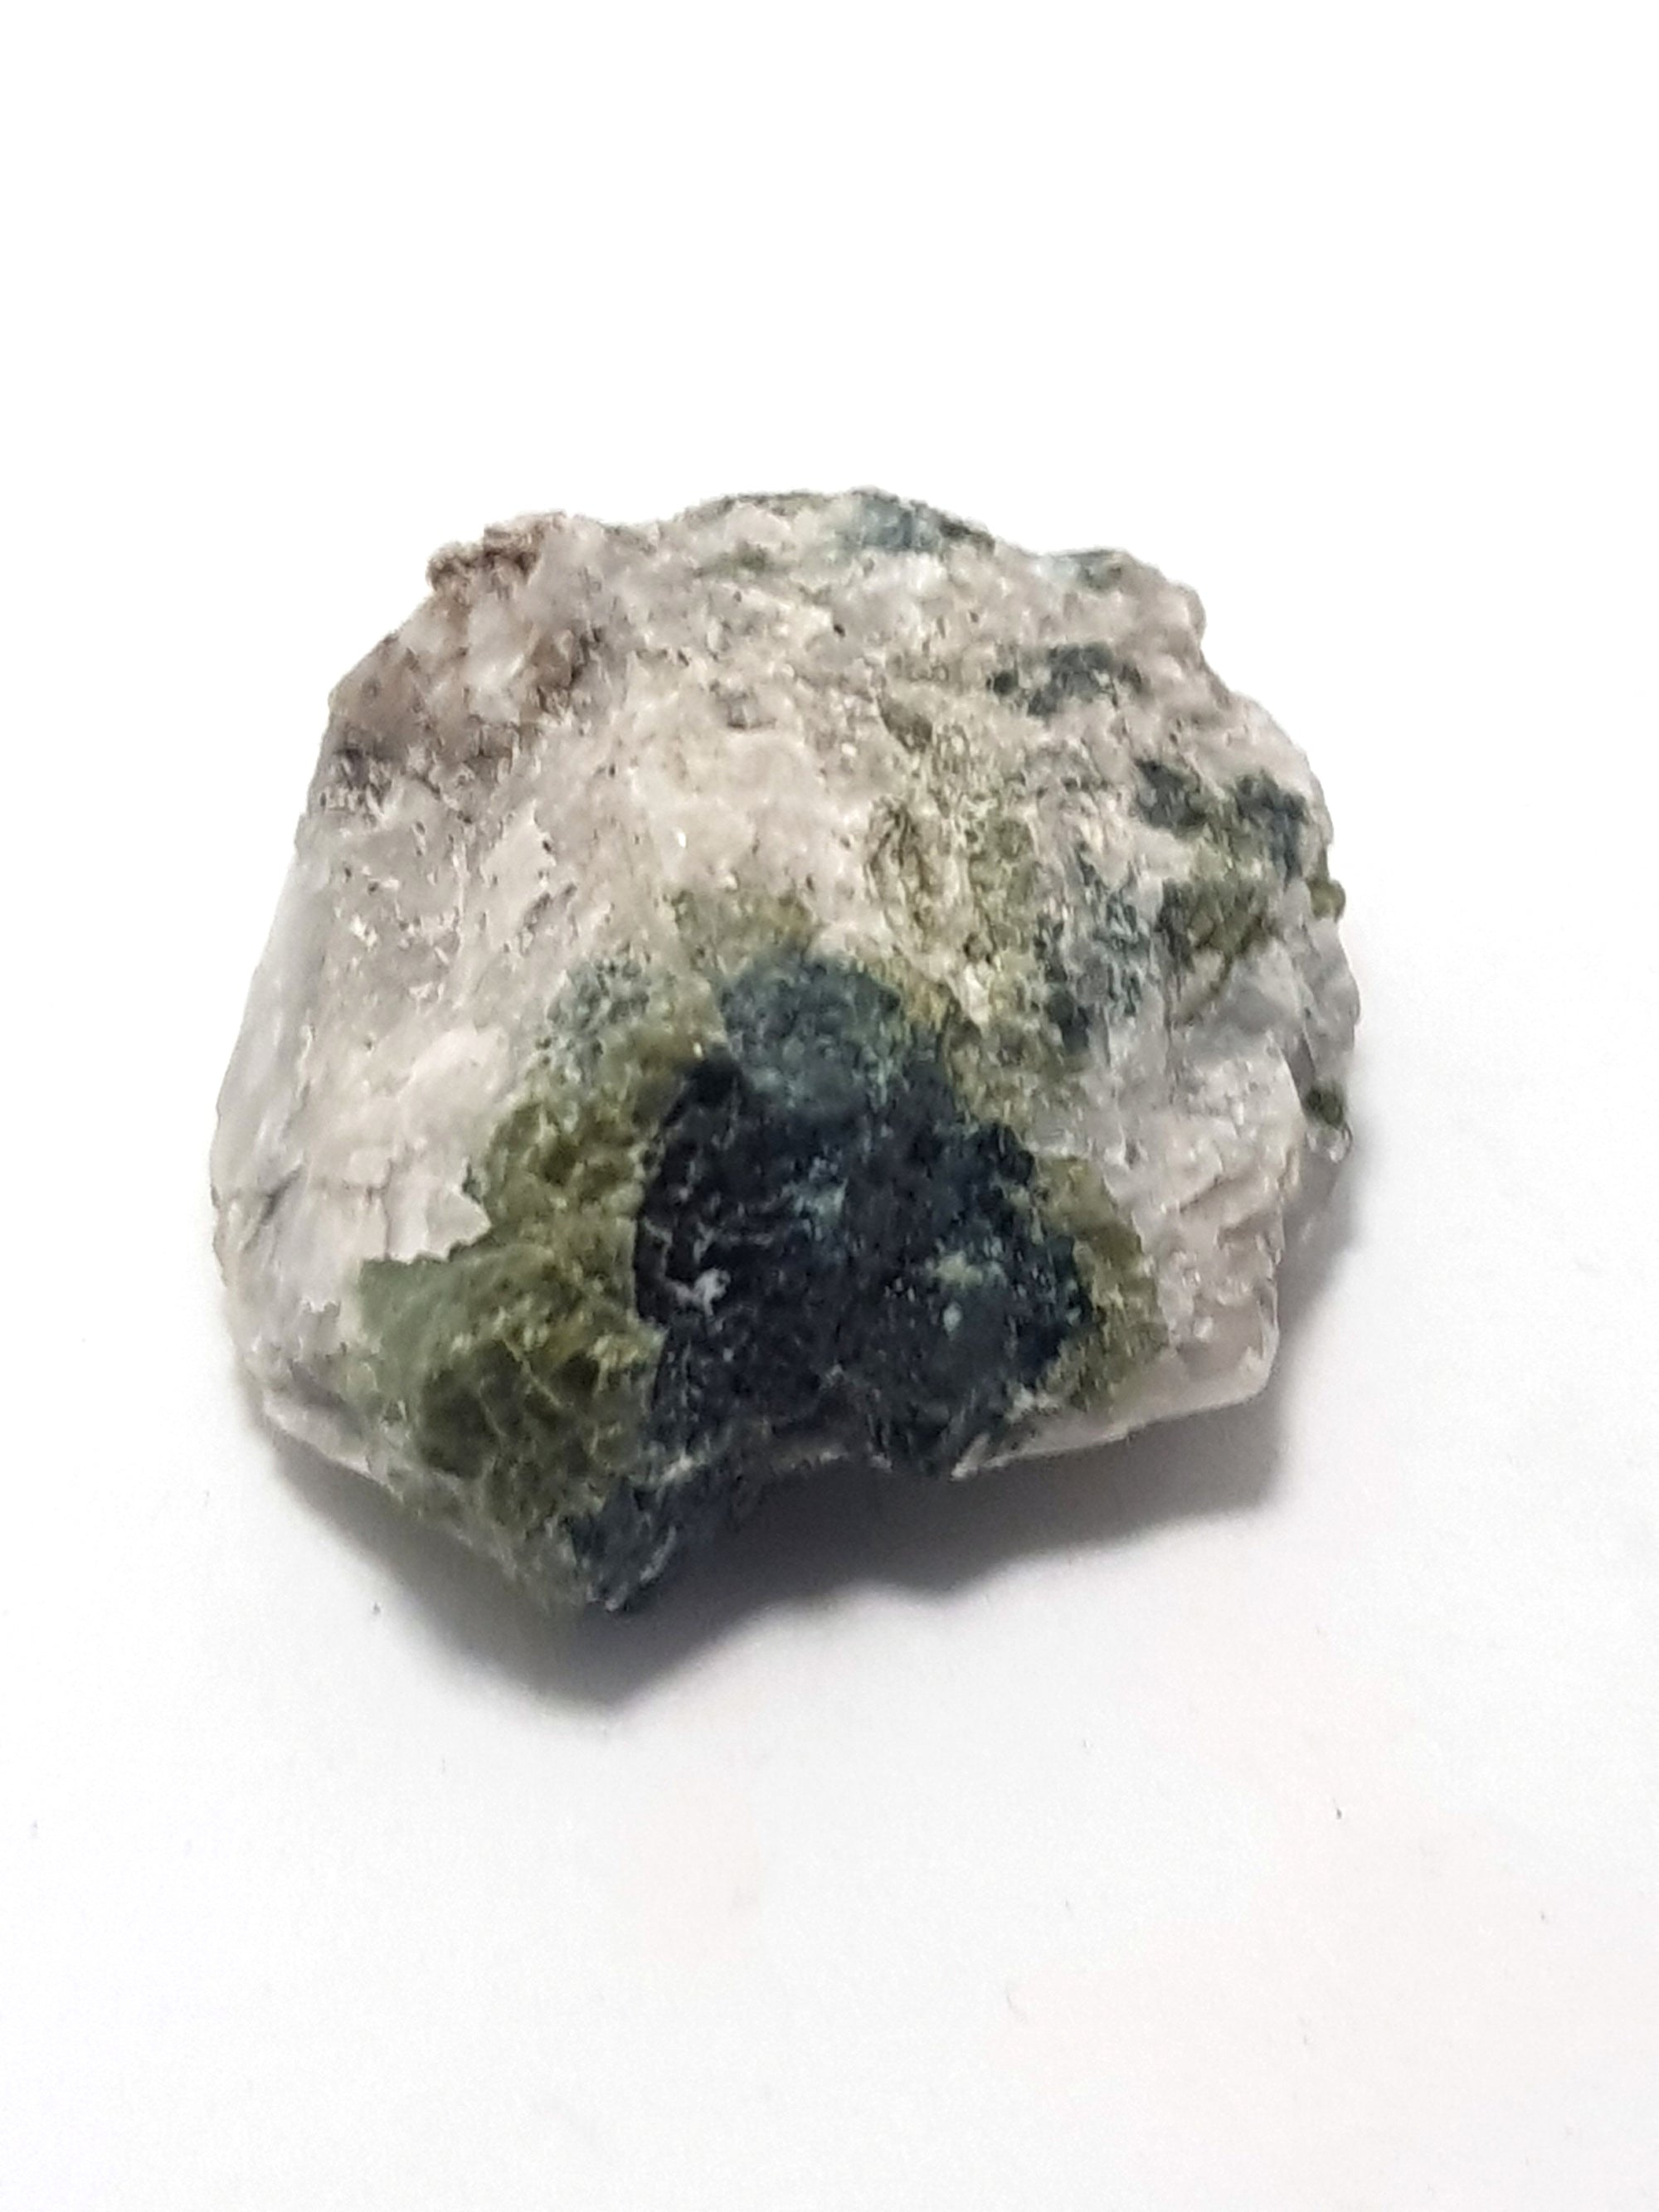 light and dark green tourmaline in plagioclase and quartz